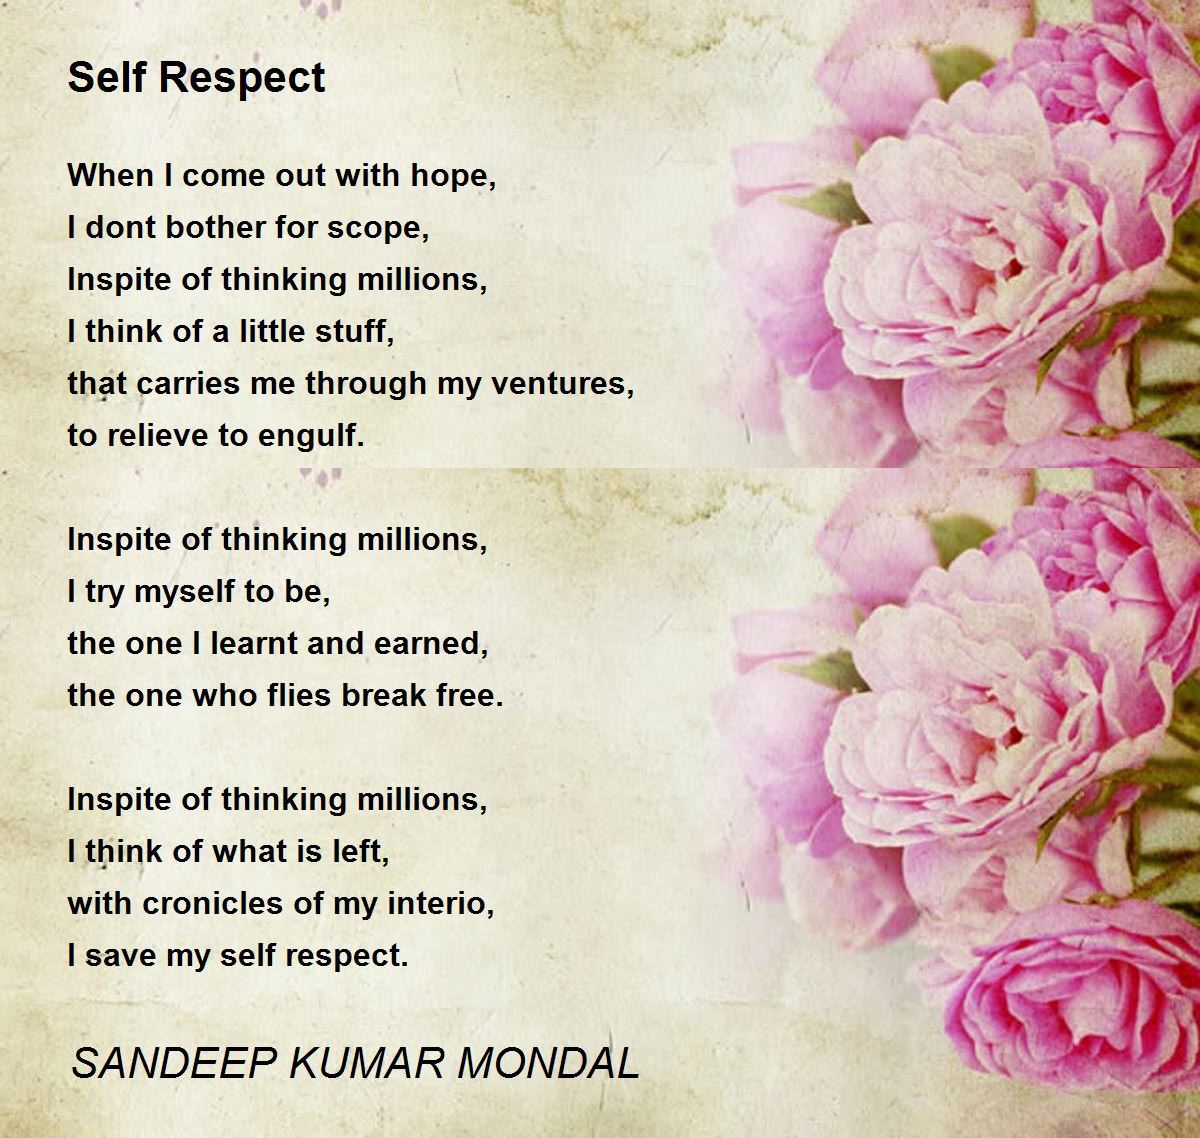 Self Respect - Self Respect Poem by SANDEEP KUMAR MONDAL